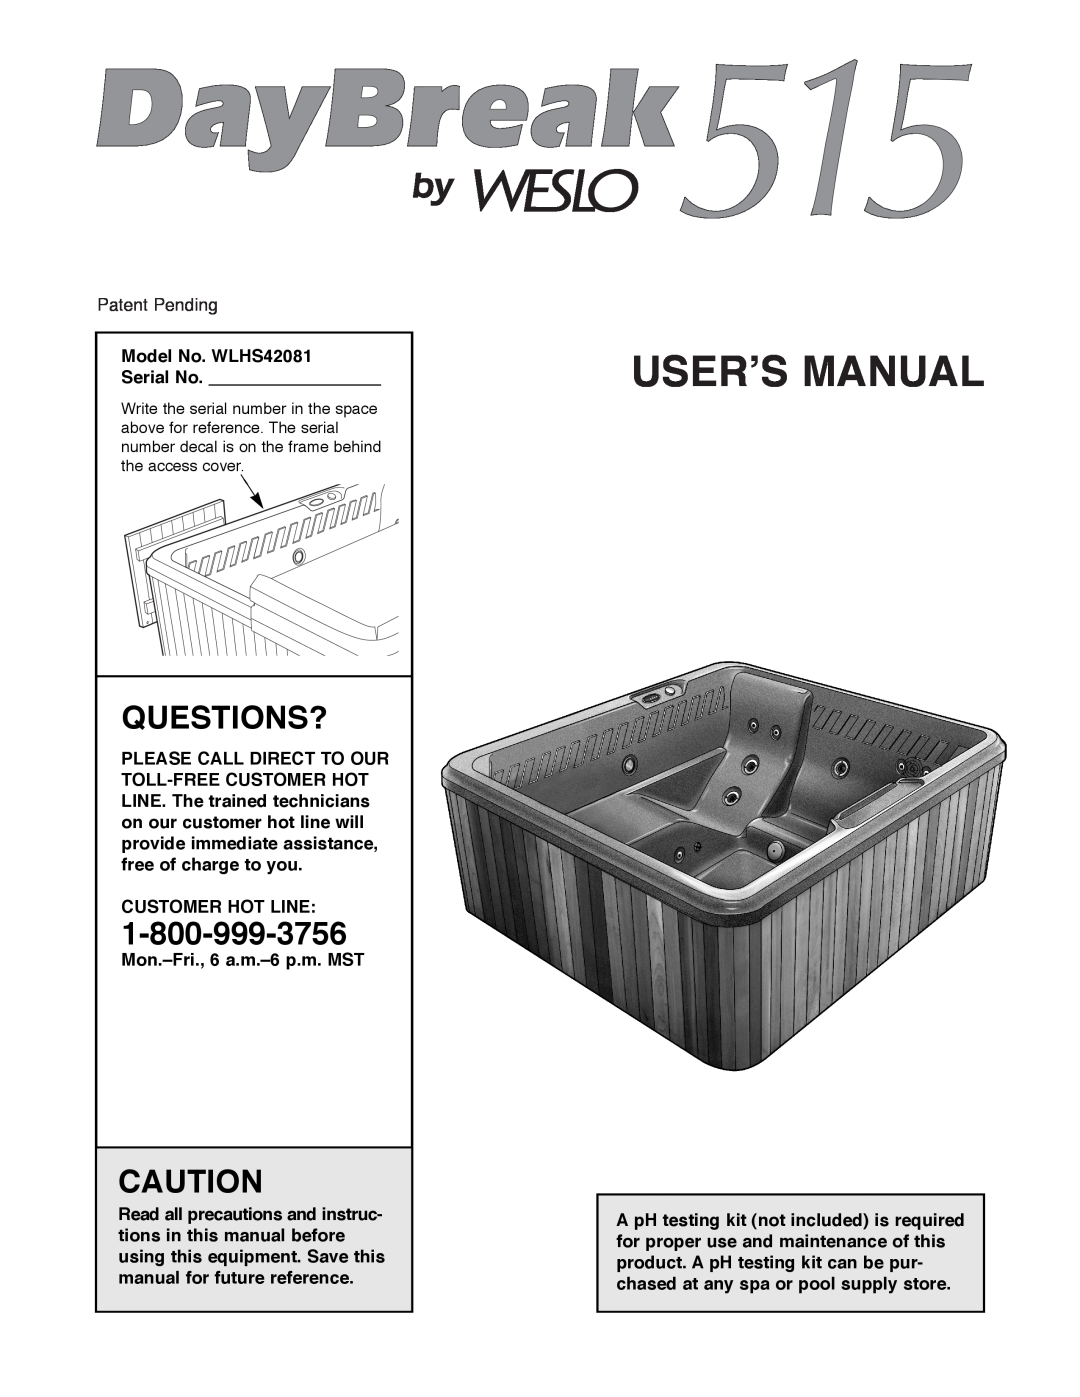 Weslo WLHS42081 manual Questions?, Userõs Manual 